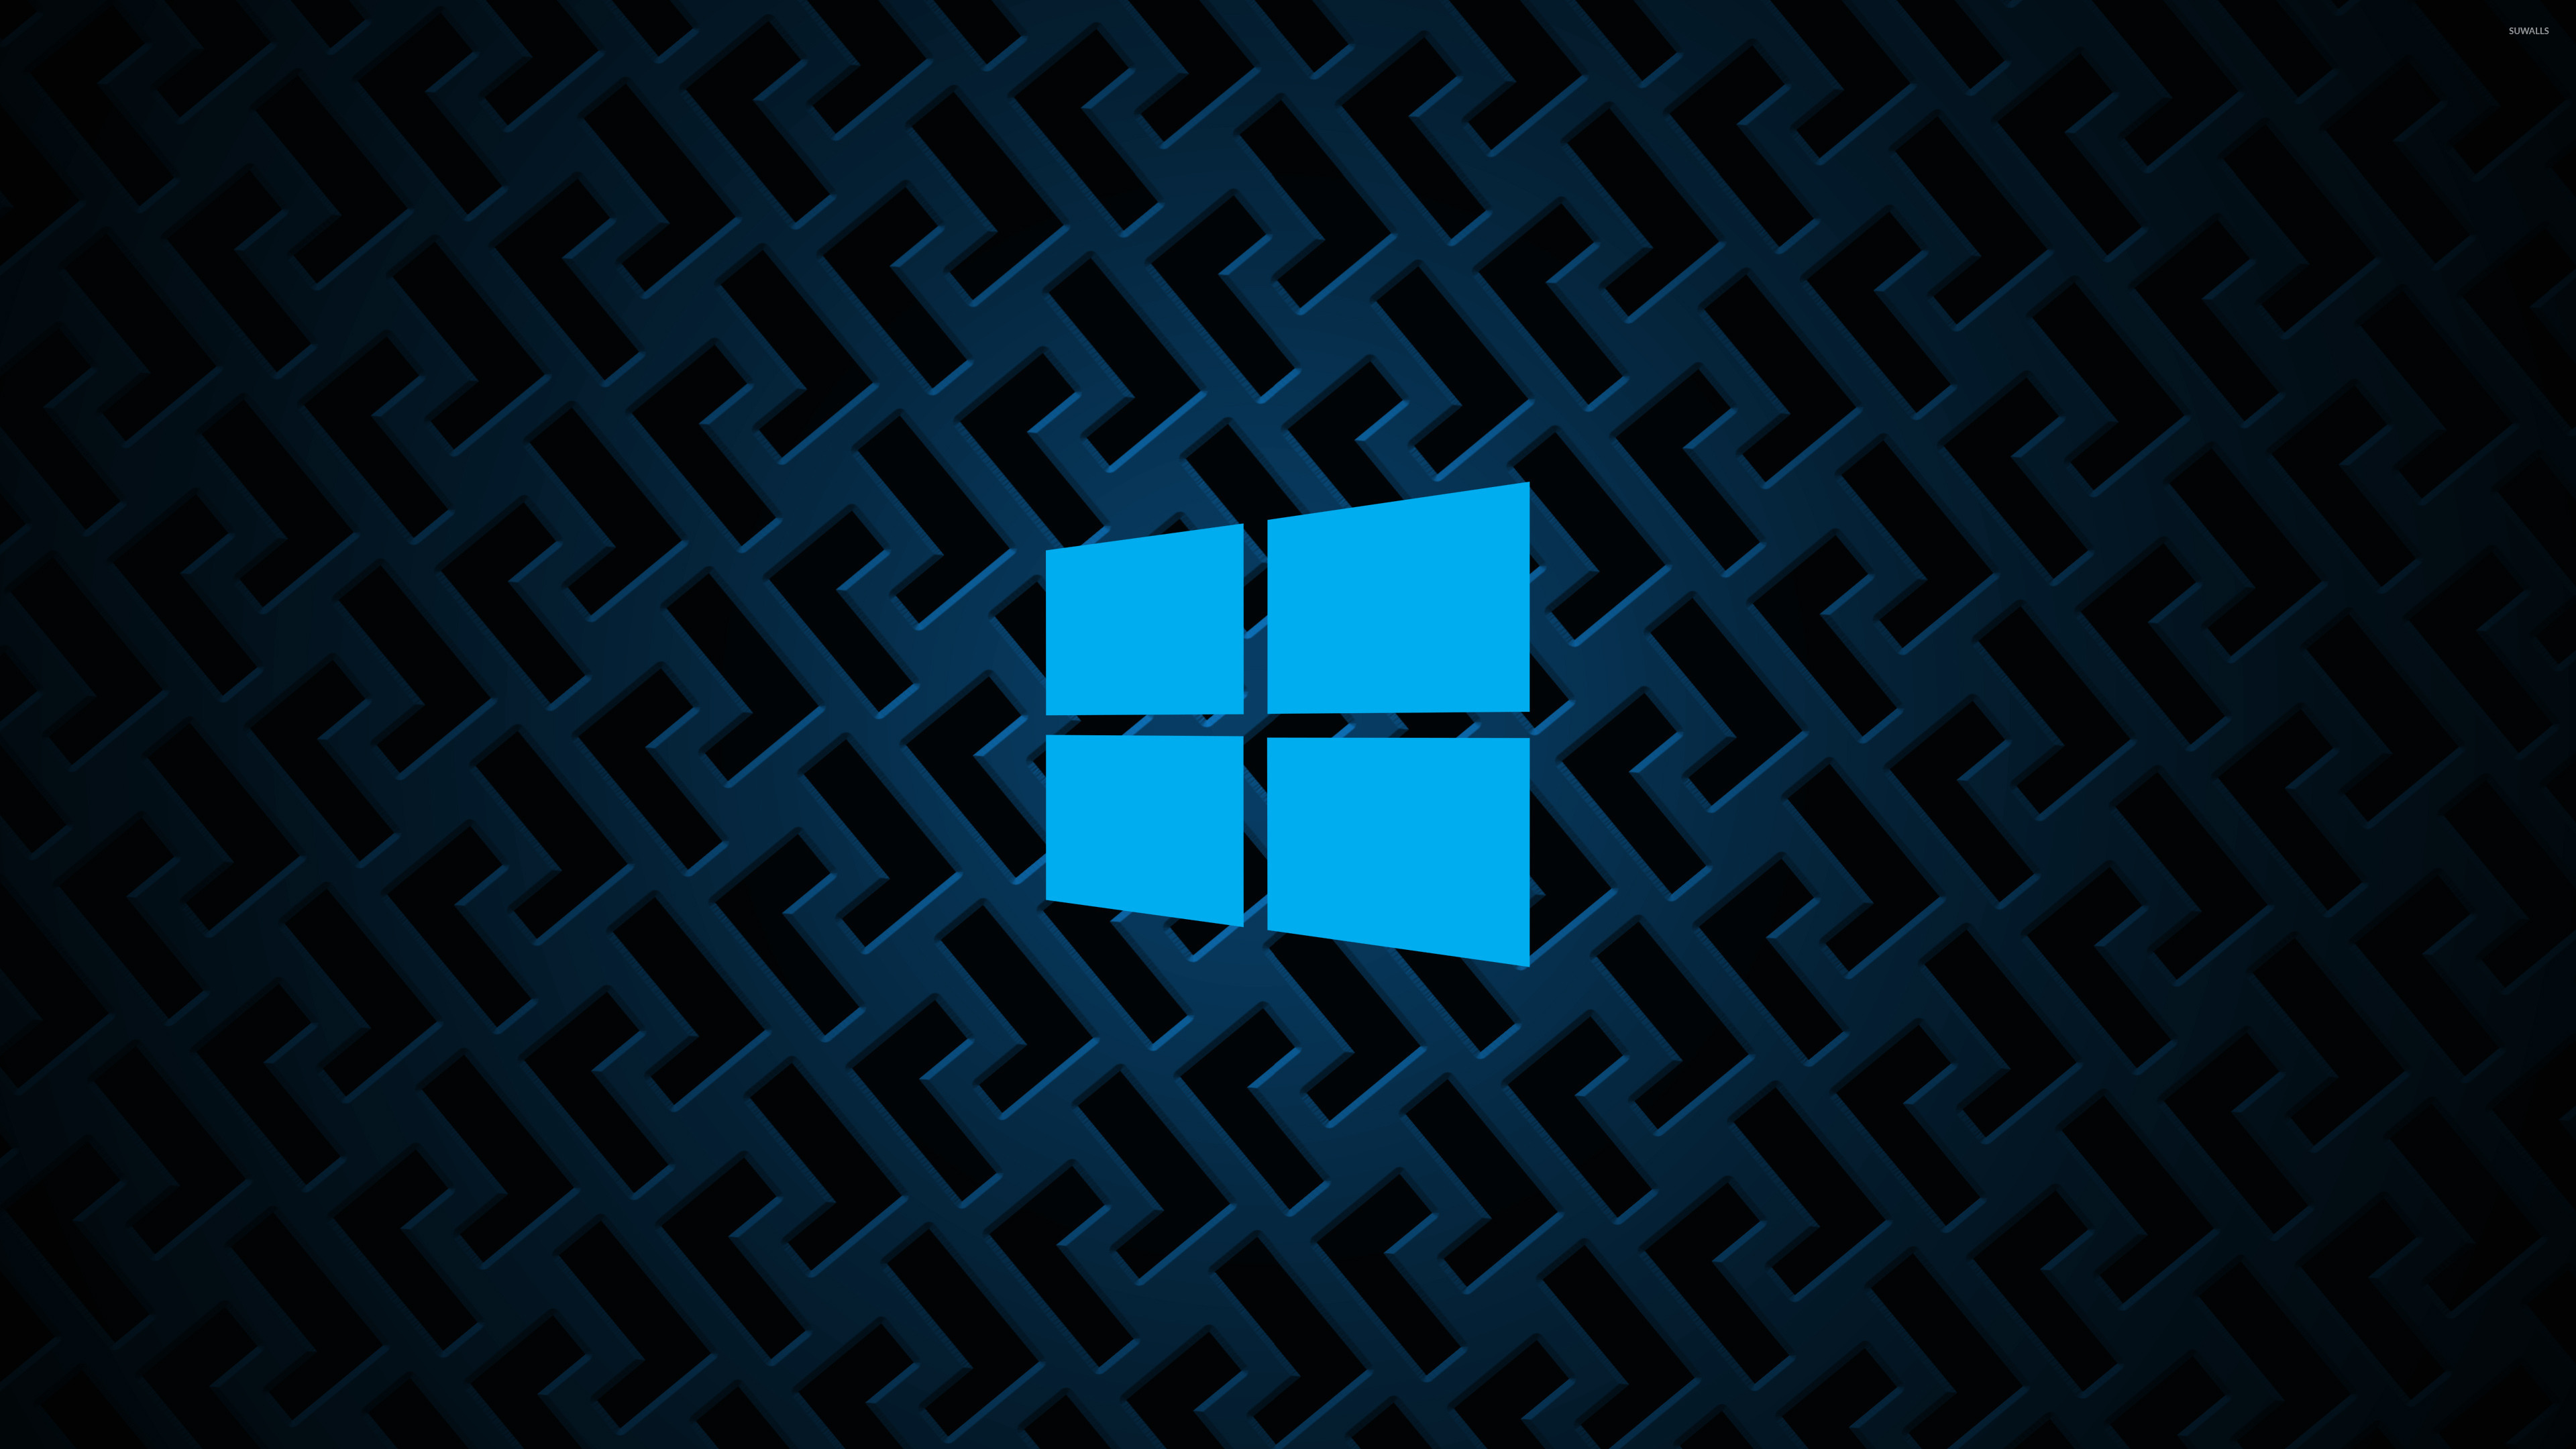 Windows 10 on metallic grid simple blue logo wallpaper - Computer